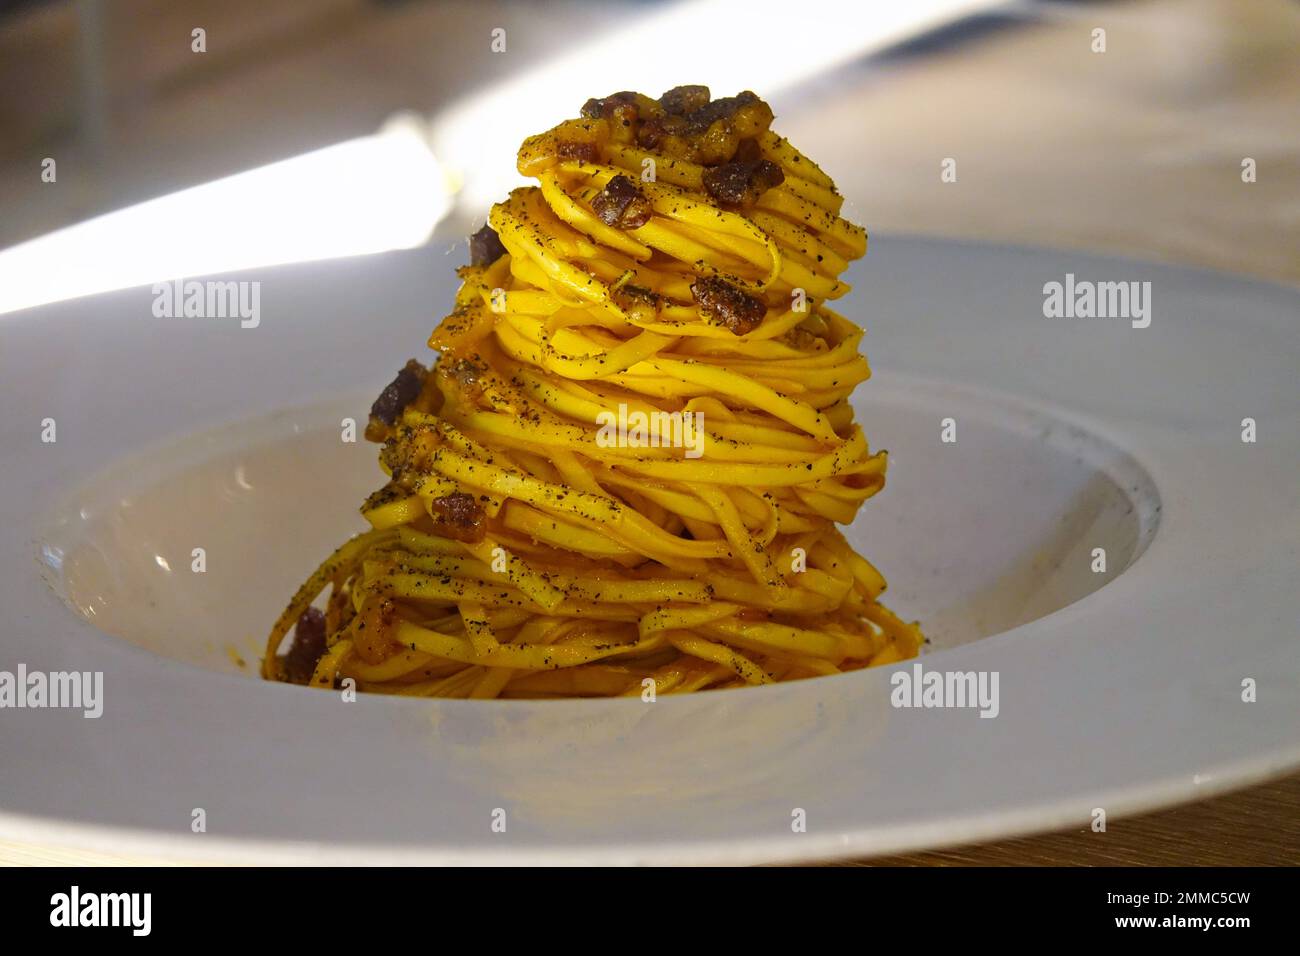 Dish of Spaghetti Carbonara, a typical Italian pasta recipe with guanciale, egg and pecorino romano cheese Stock Photo